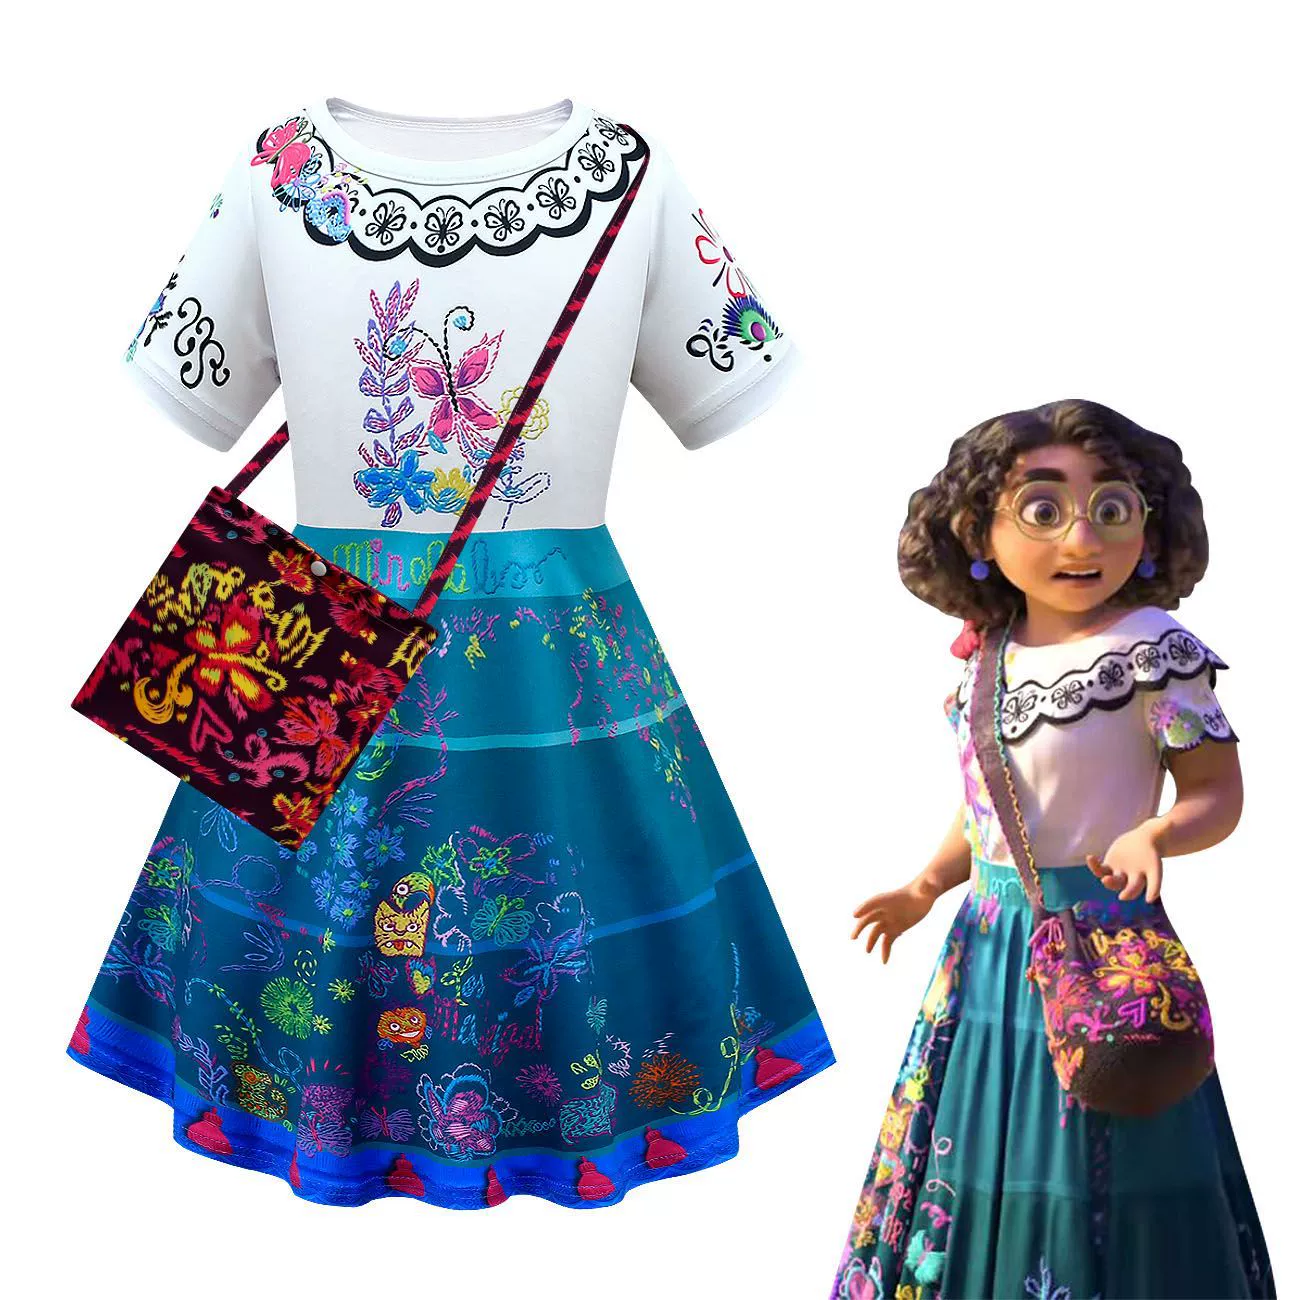 2021 New Charm Mirabell Madrid Animation Costume Girls Princess Dress Halloween Carnival Cosplay Costume long skirt top design for baby girl